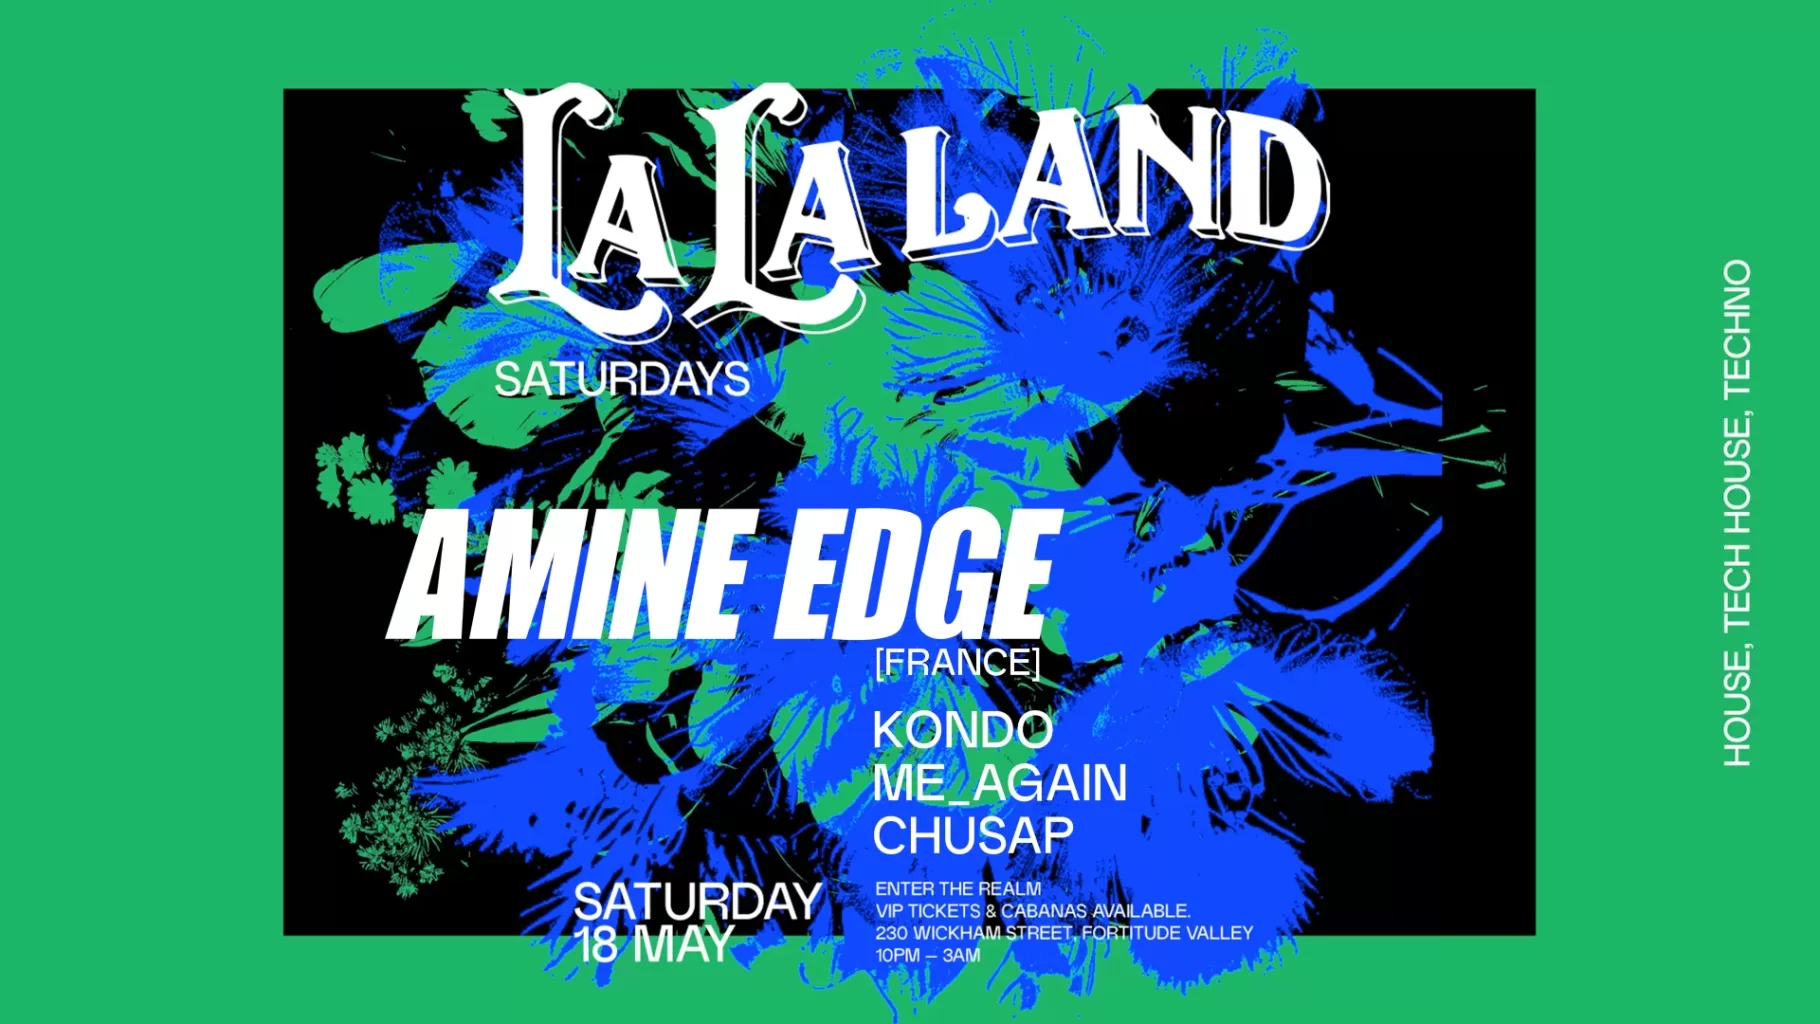 La La Land Saturdays ft. Amine Edge [FRANCE] | Events at The Prince Consort